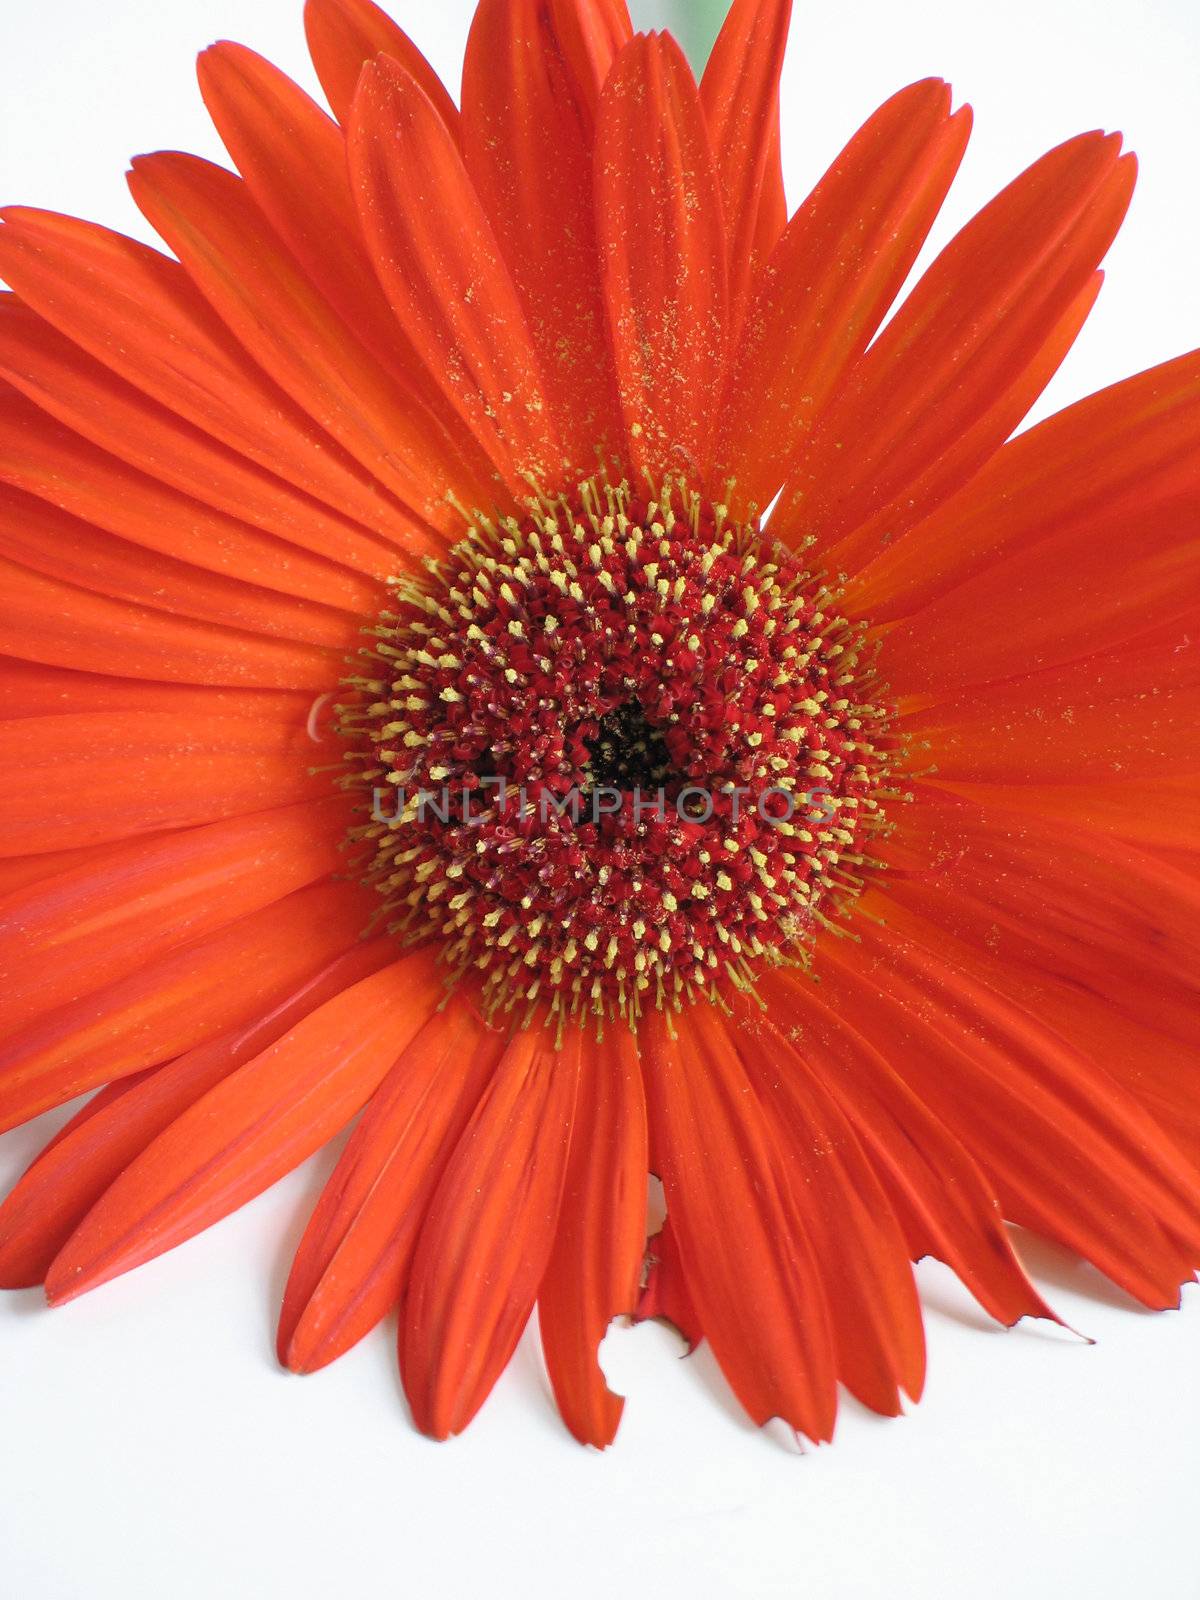 orange daisy close-up by mmm